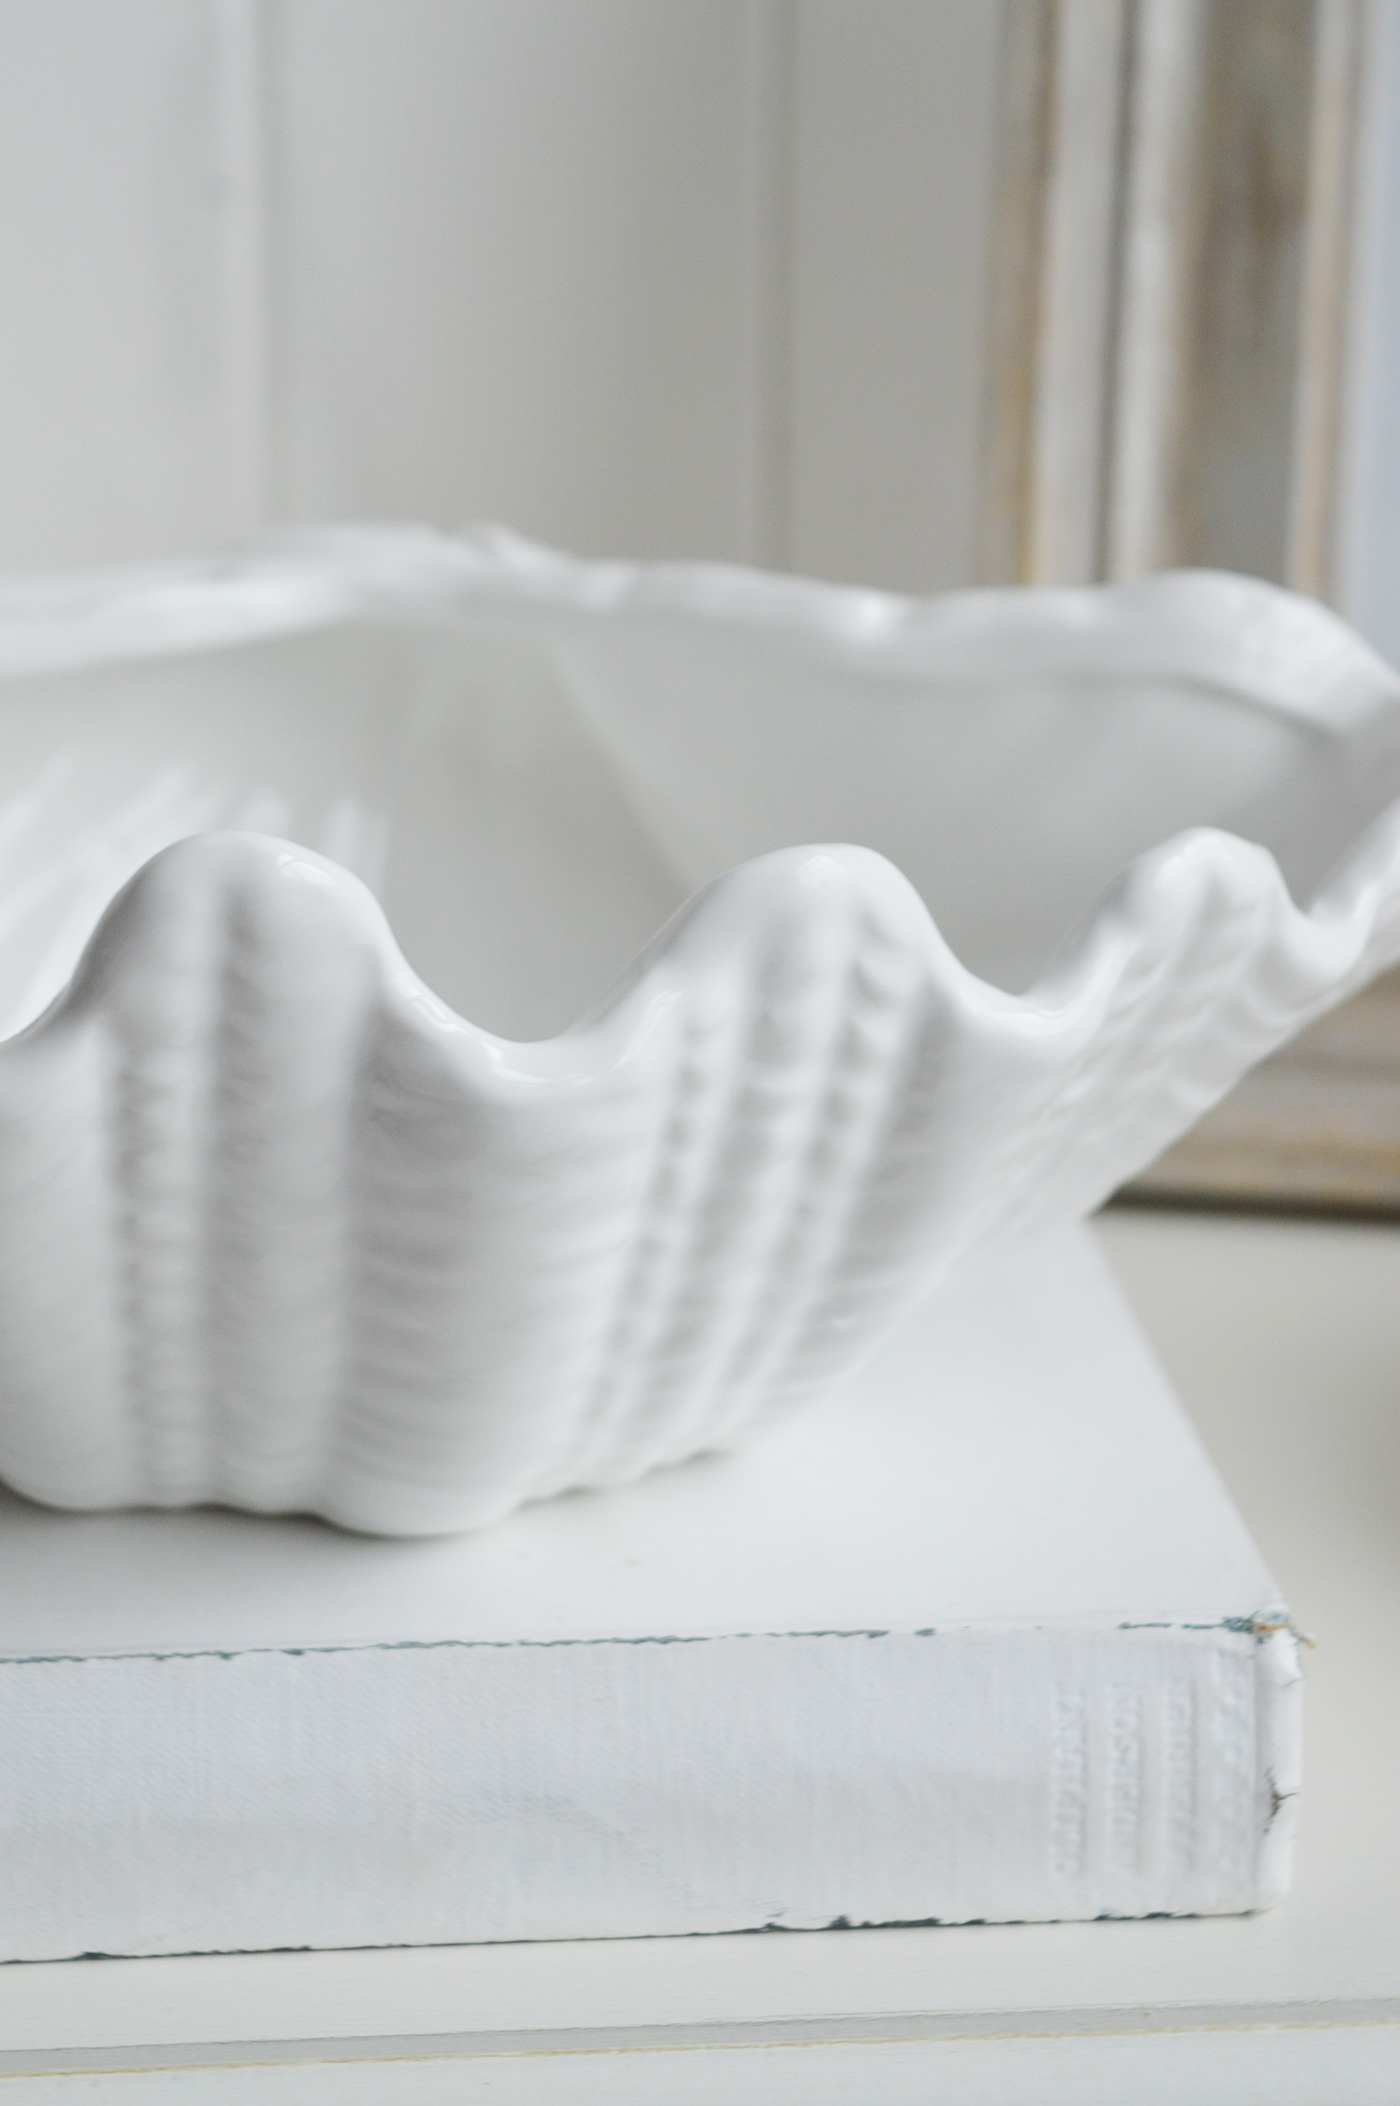 White Ceramic Clam Dish - Hamptons Coastal Console Table Styling and Decor